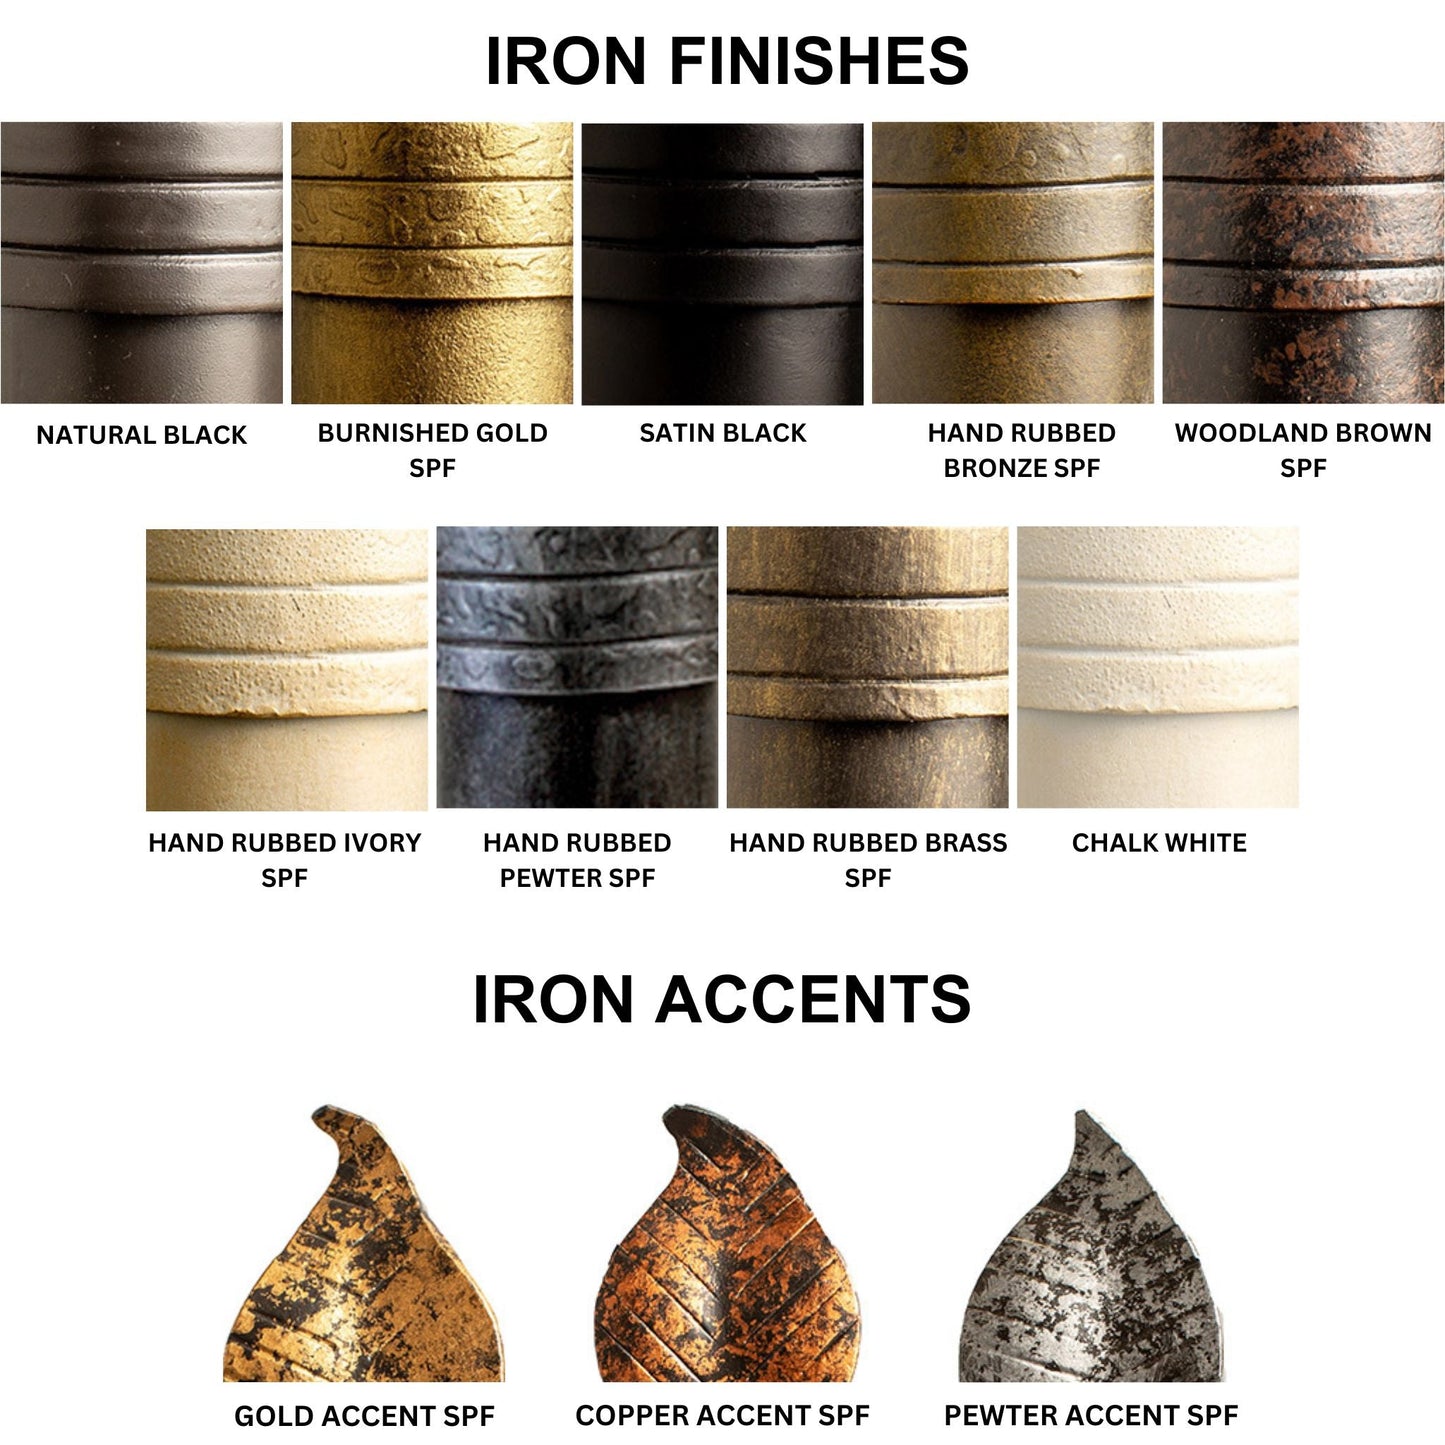 Stone County Ironworks Sassafras 16" Burnished Gold Iron Towel Bar With Pewter Iron Accent